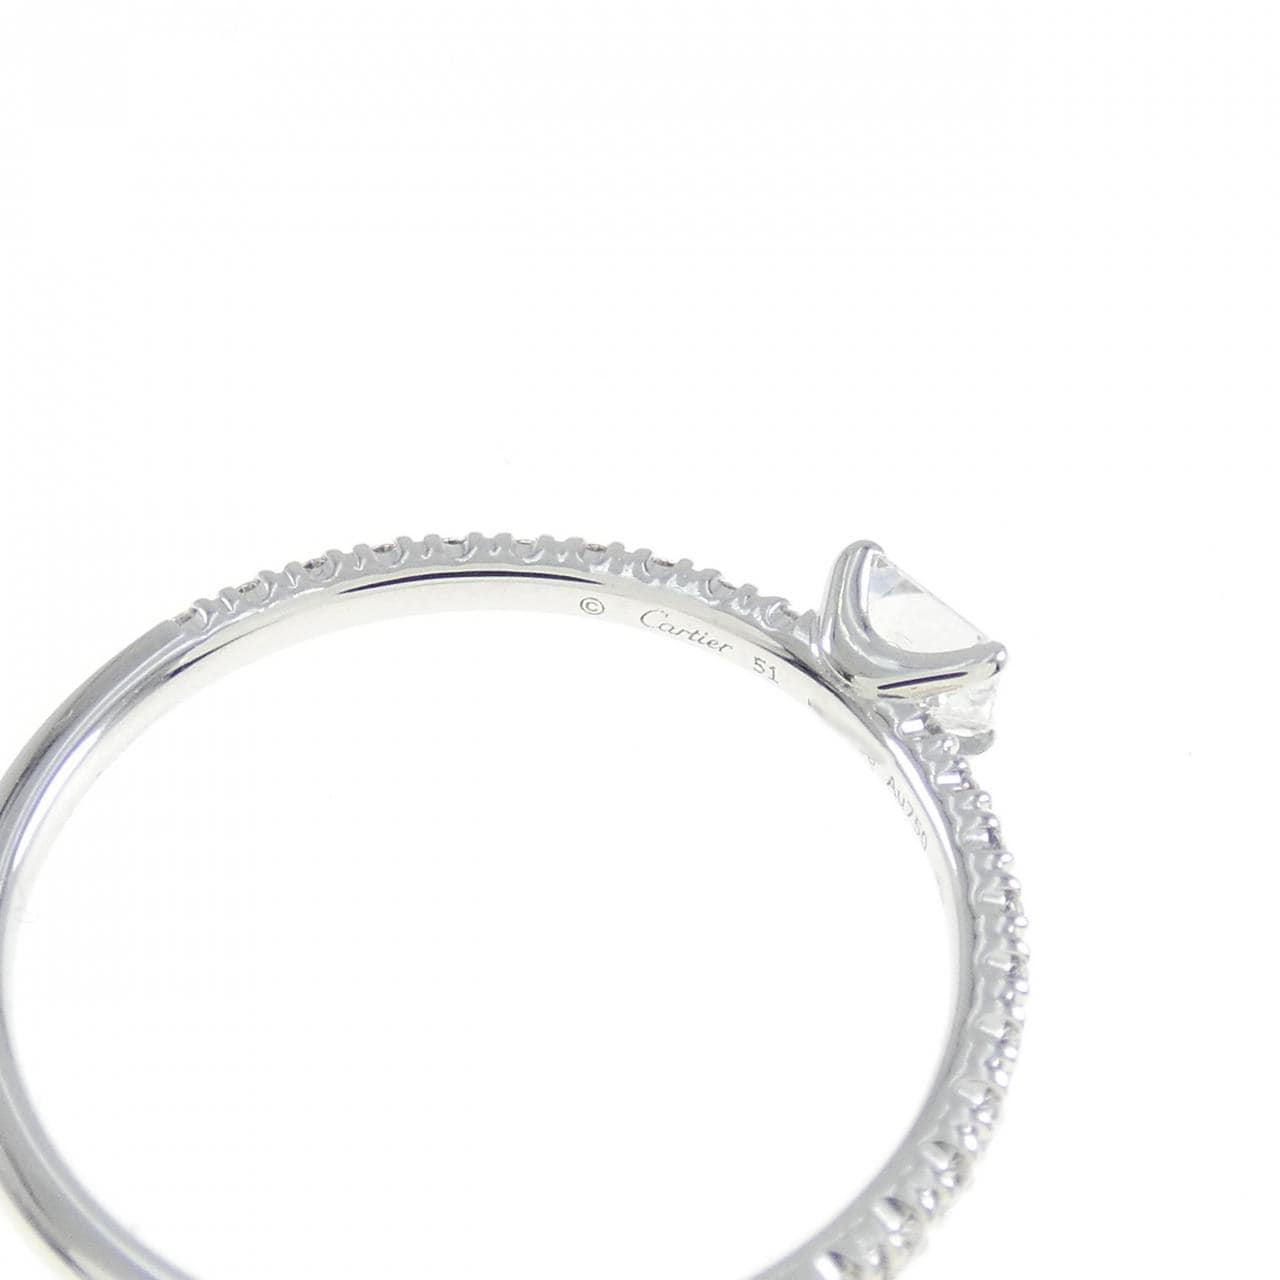 Cartier etancel ring